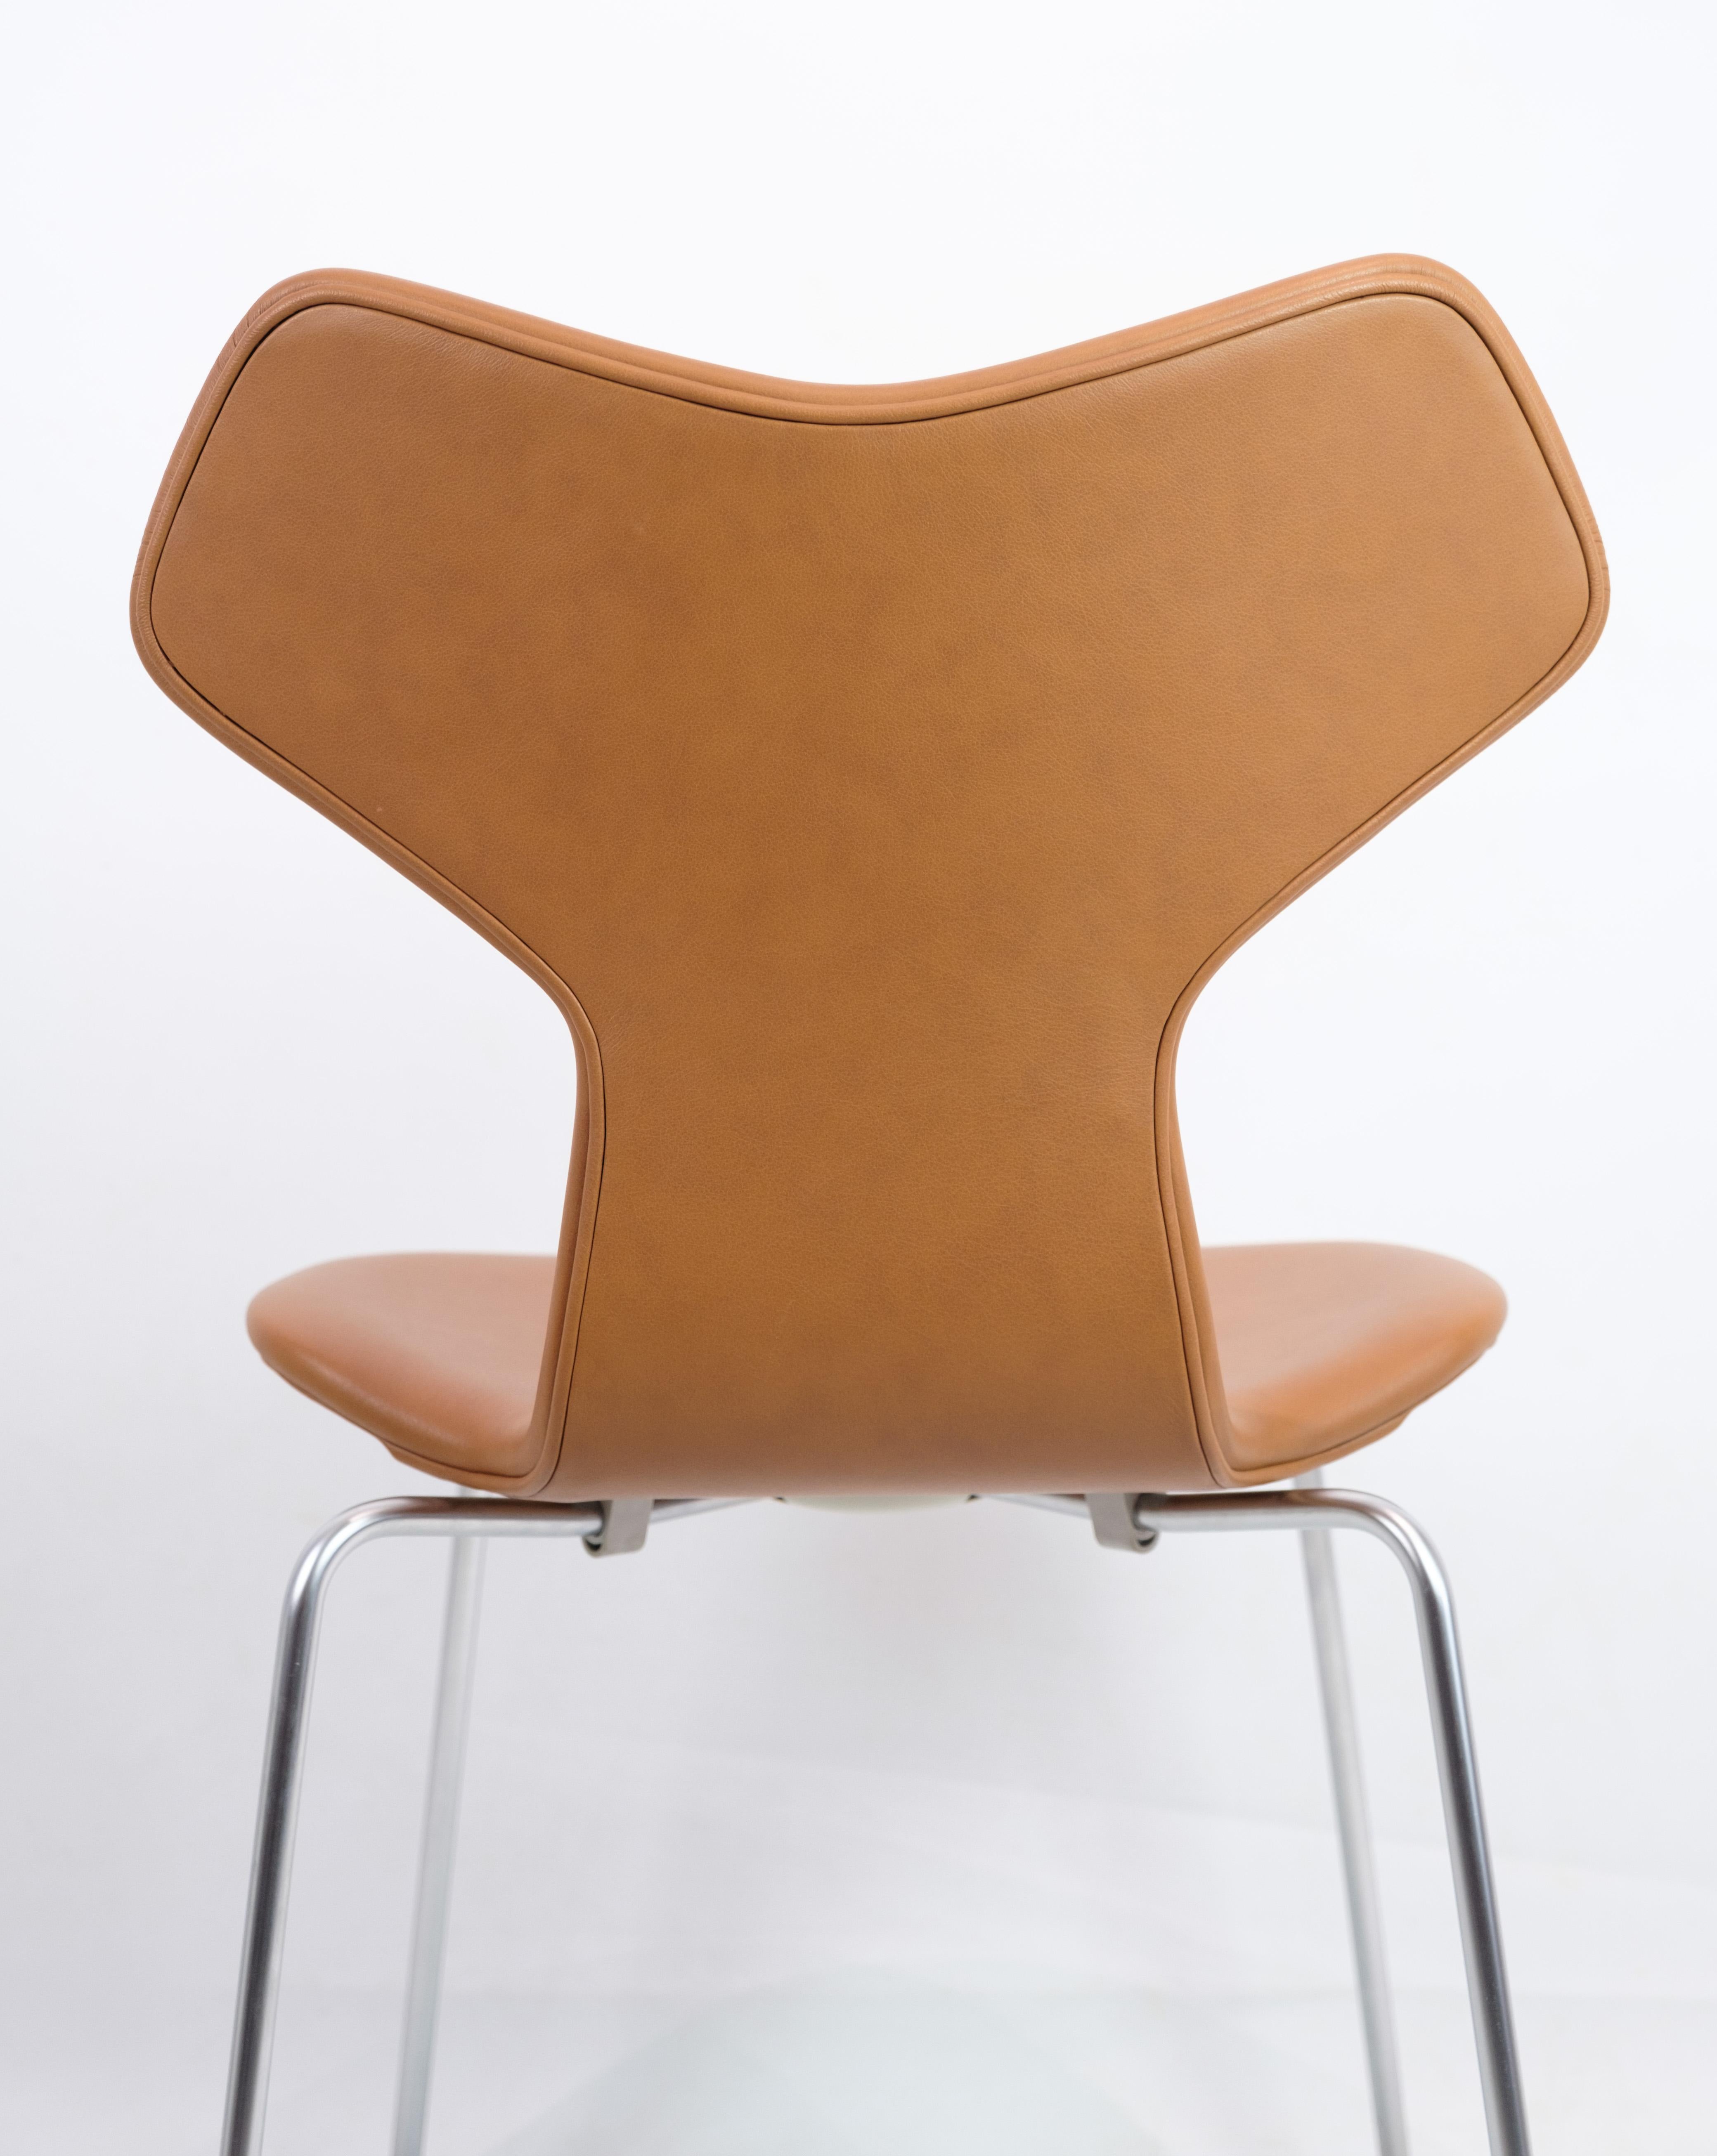 Mid-20th Century Grand Prix chair, Model 3130, Arne Jacobsen, 1957